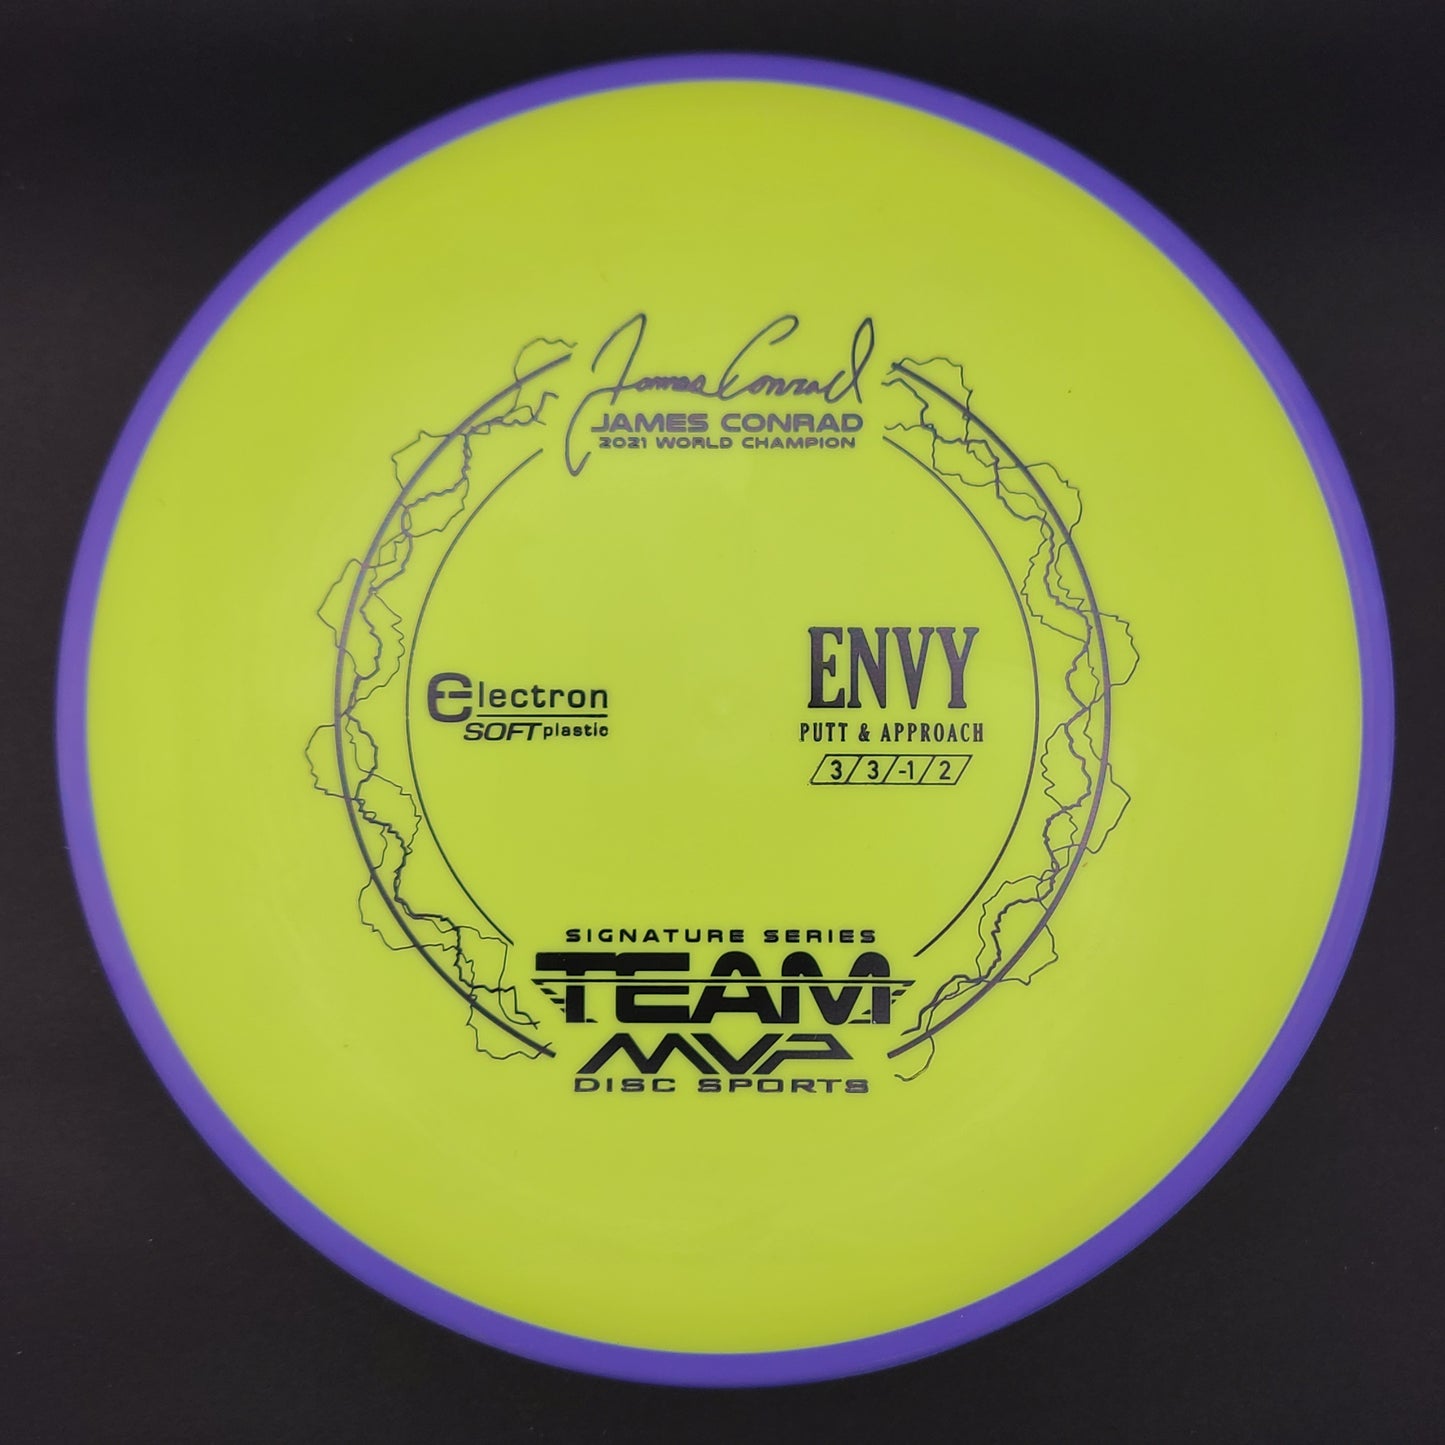 Axiom - Envy - Electron Soft